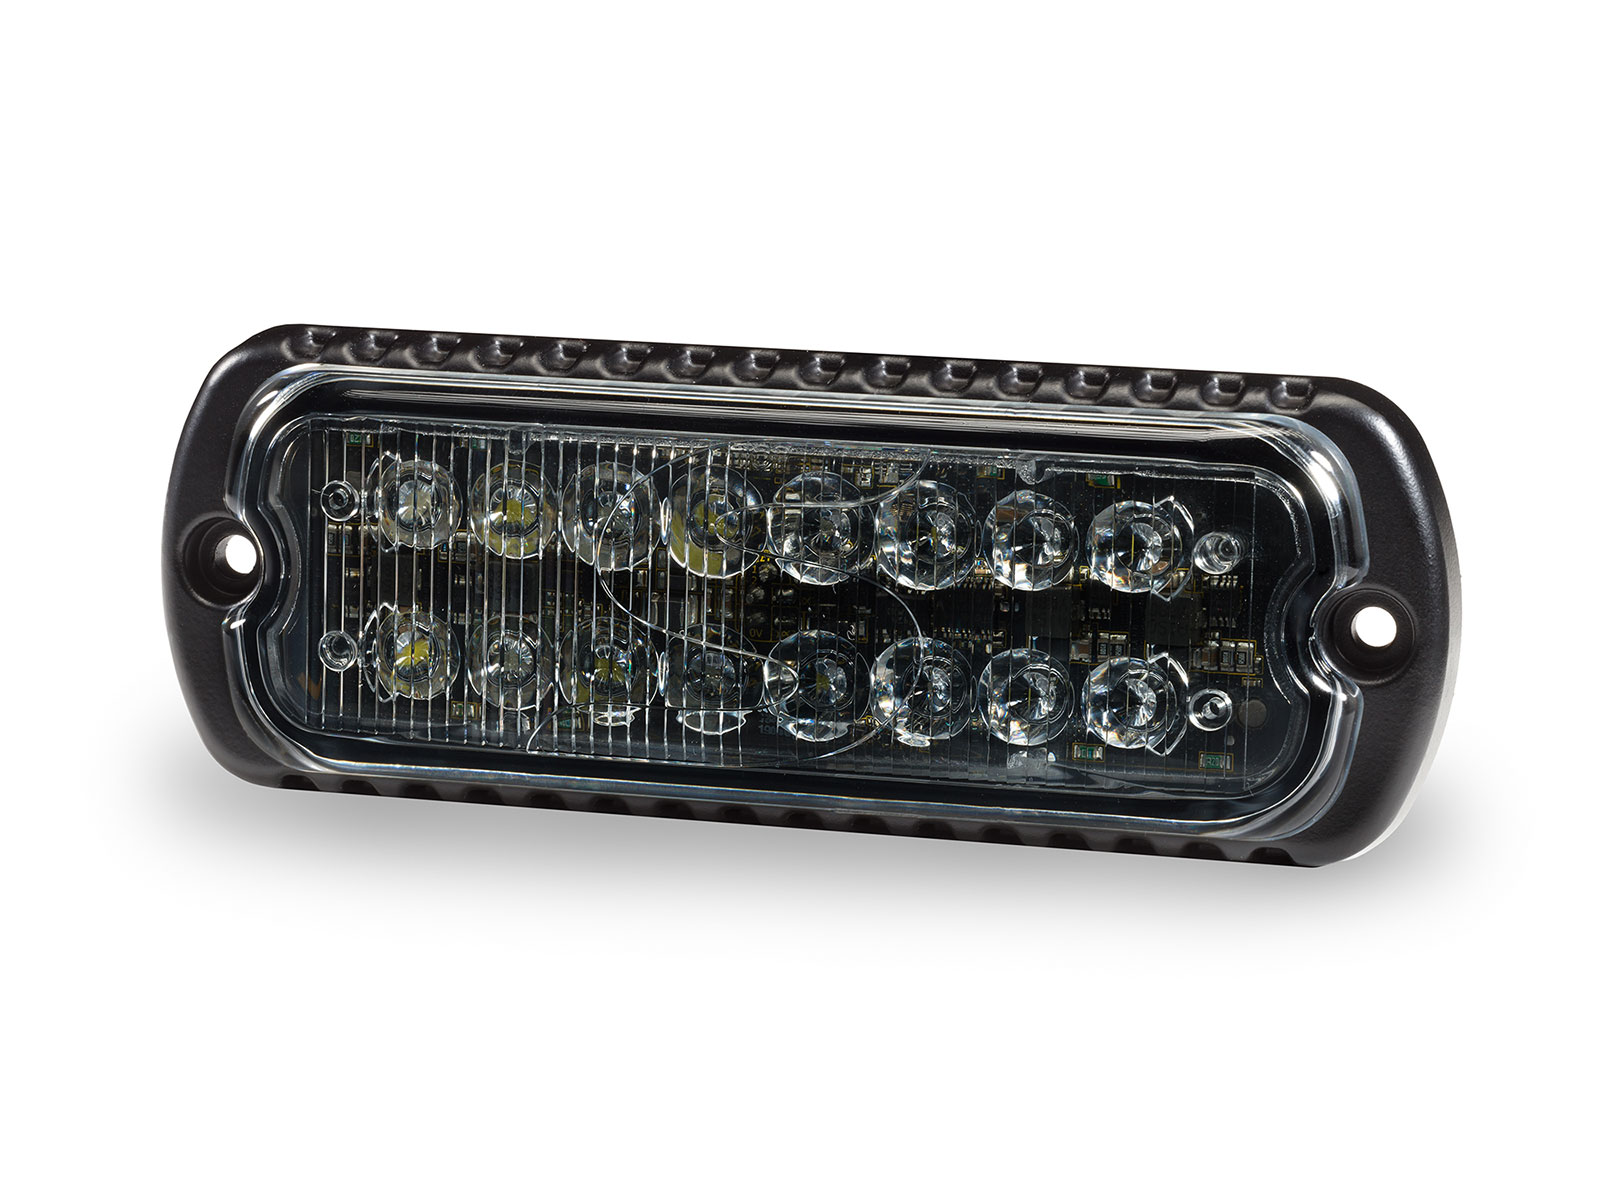 LED-Frontblitzer - Standby L56 2C (Zweifarbig)